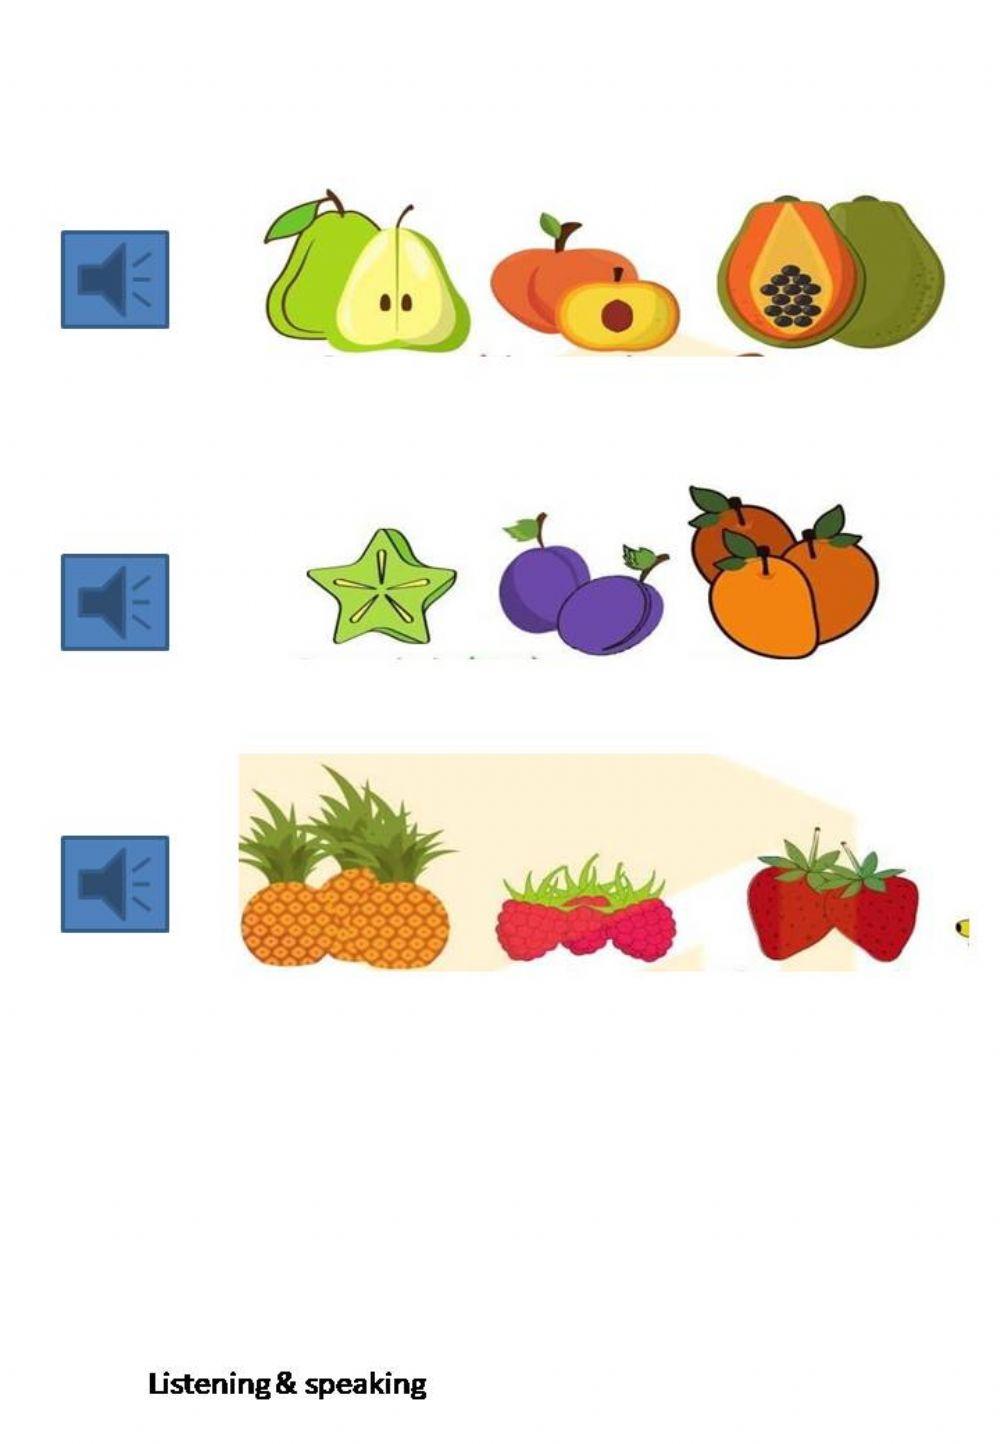 Fruits pronouce